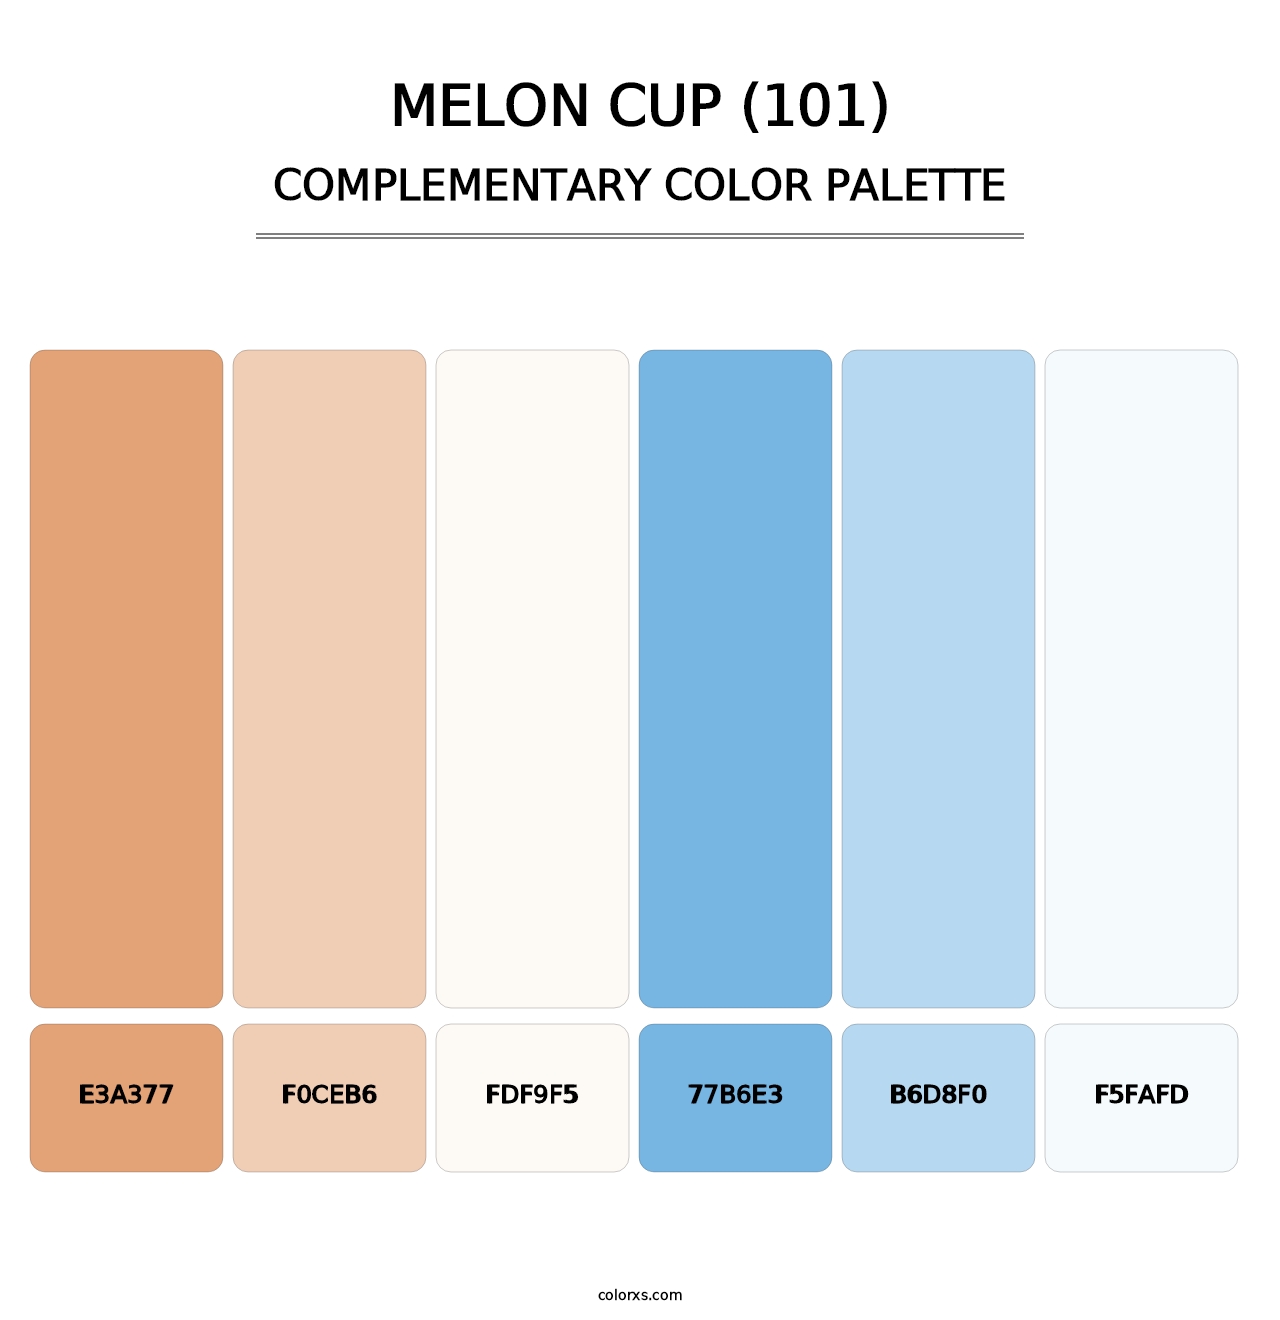 Melon Cup (101) - Complementary Color Palette